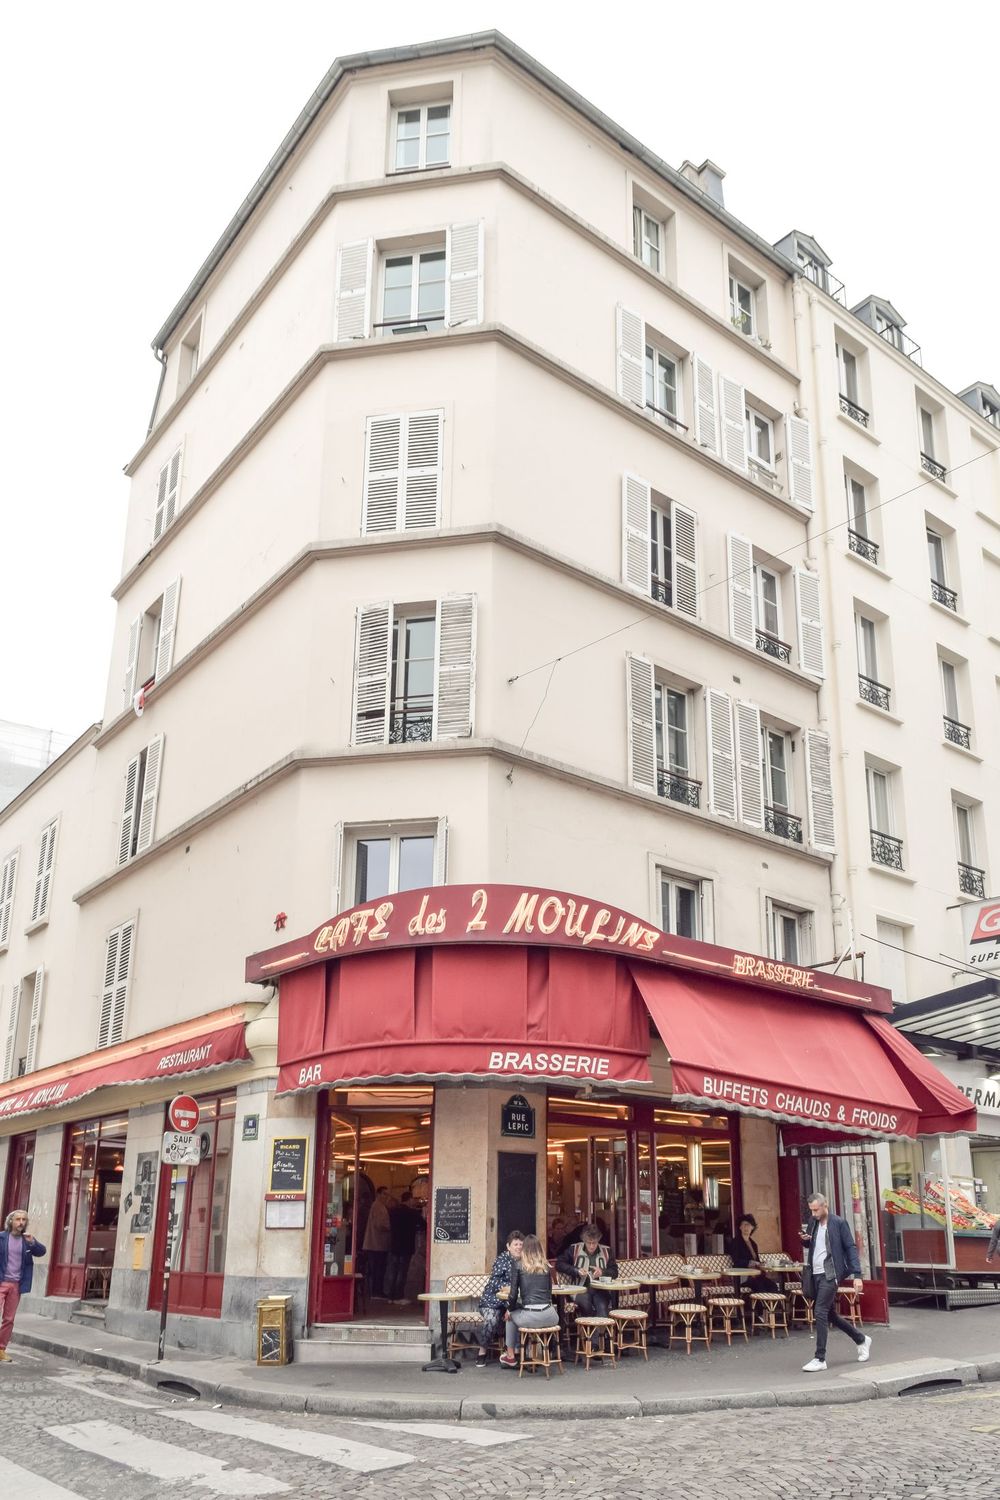 Things to do in Montmartre - Cafe Des Deux Moulins, Paris